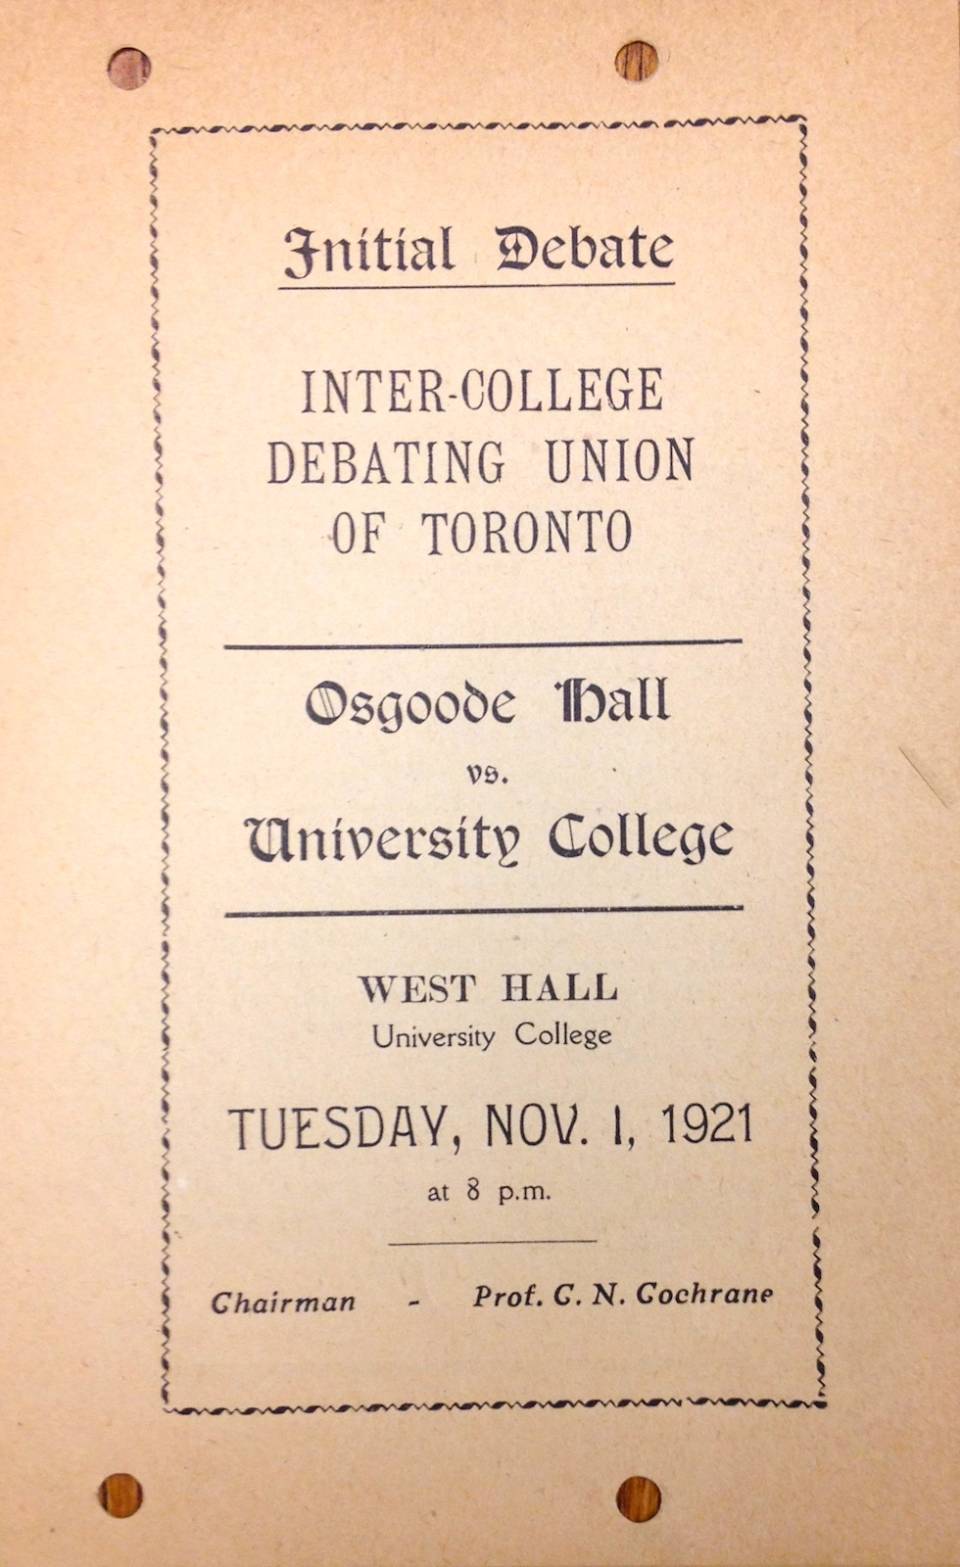 Flyer headed "Initial Debate, Inter-College Debating Union of Toronto"